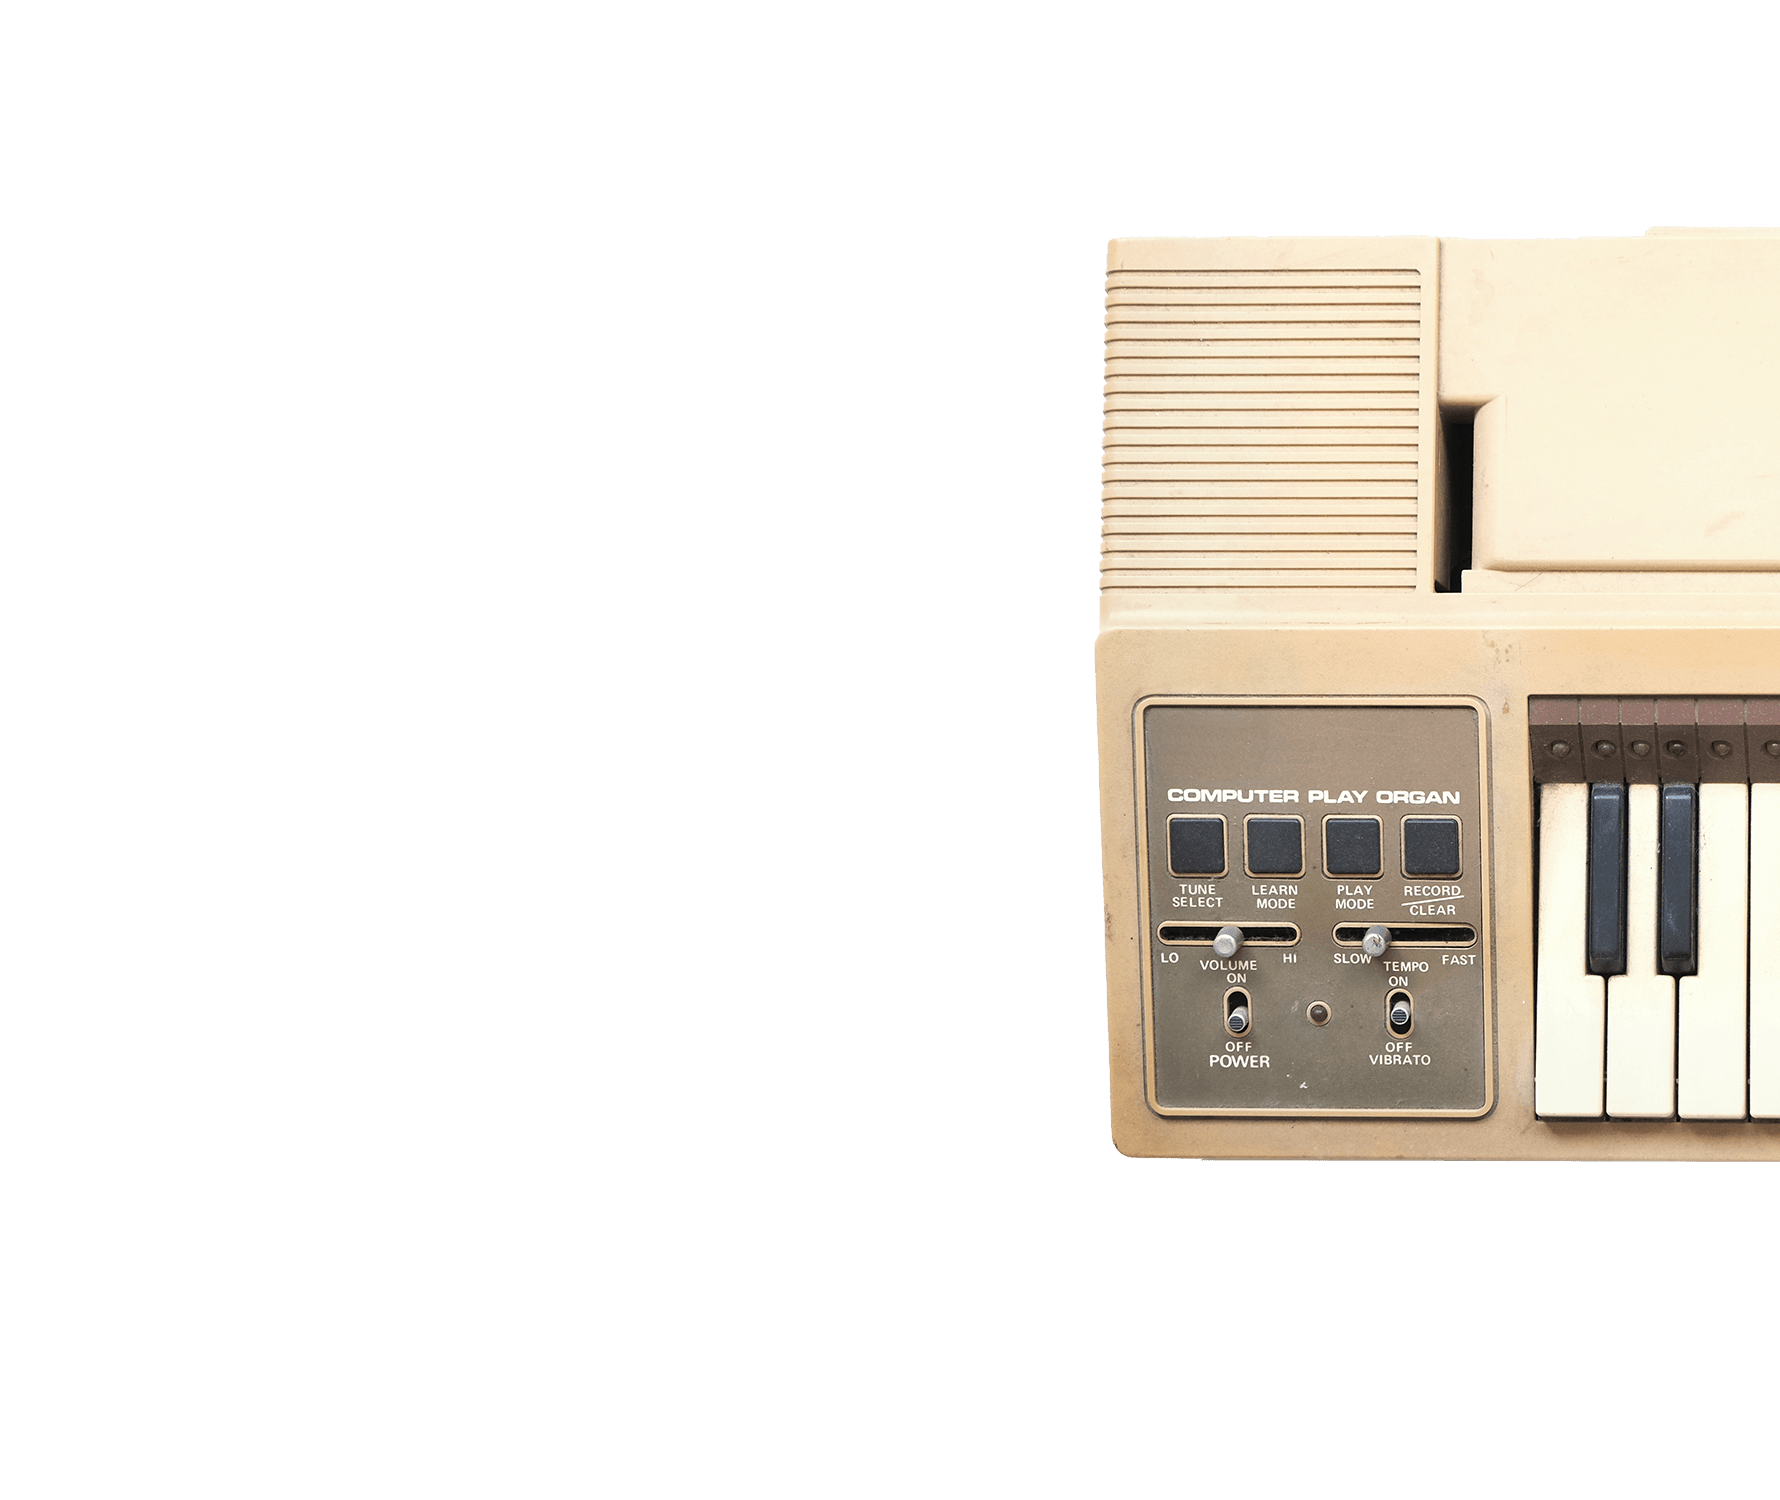 Music Box - 8Dio Music Box Sample Library for Kontakt VST/AU/AAX –